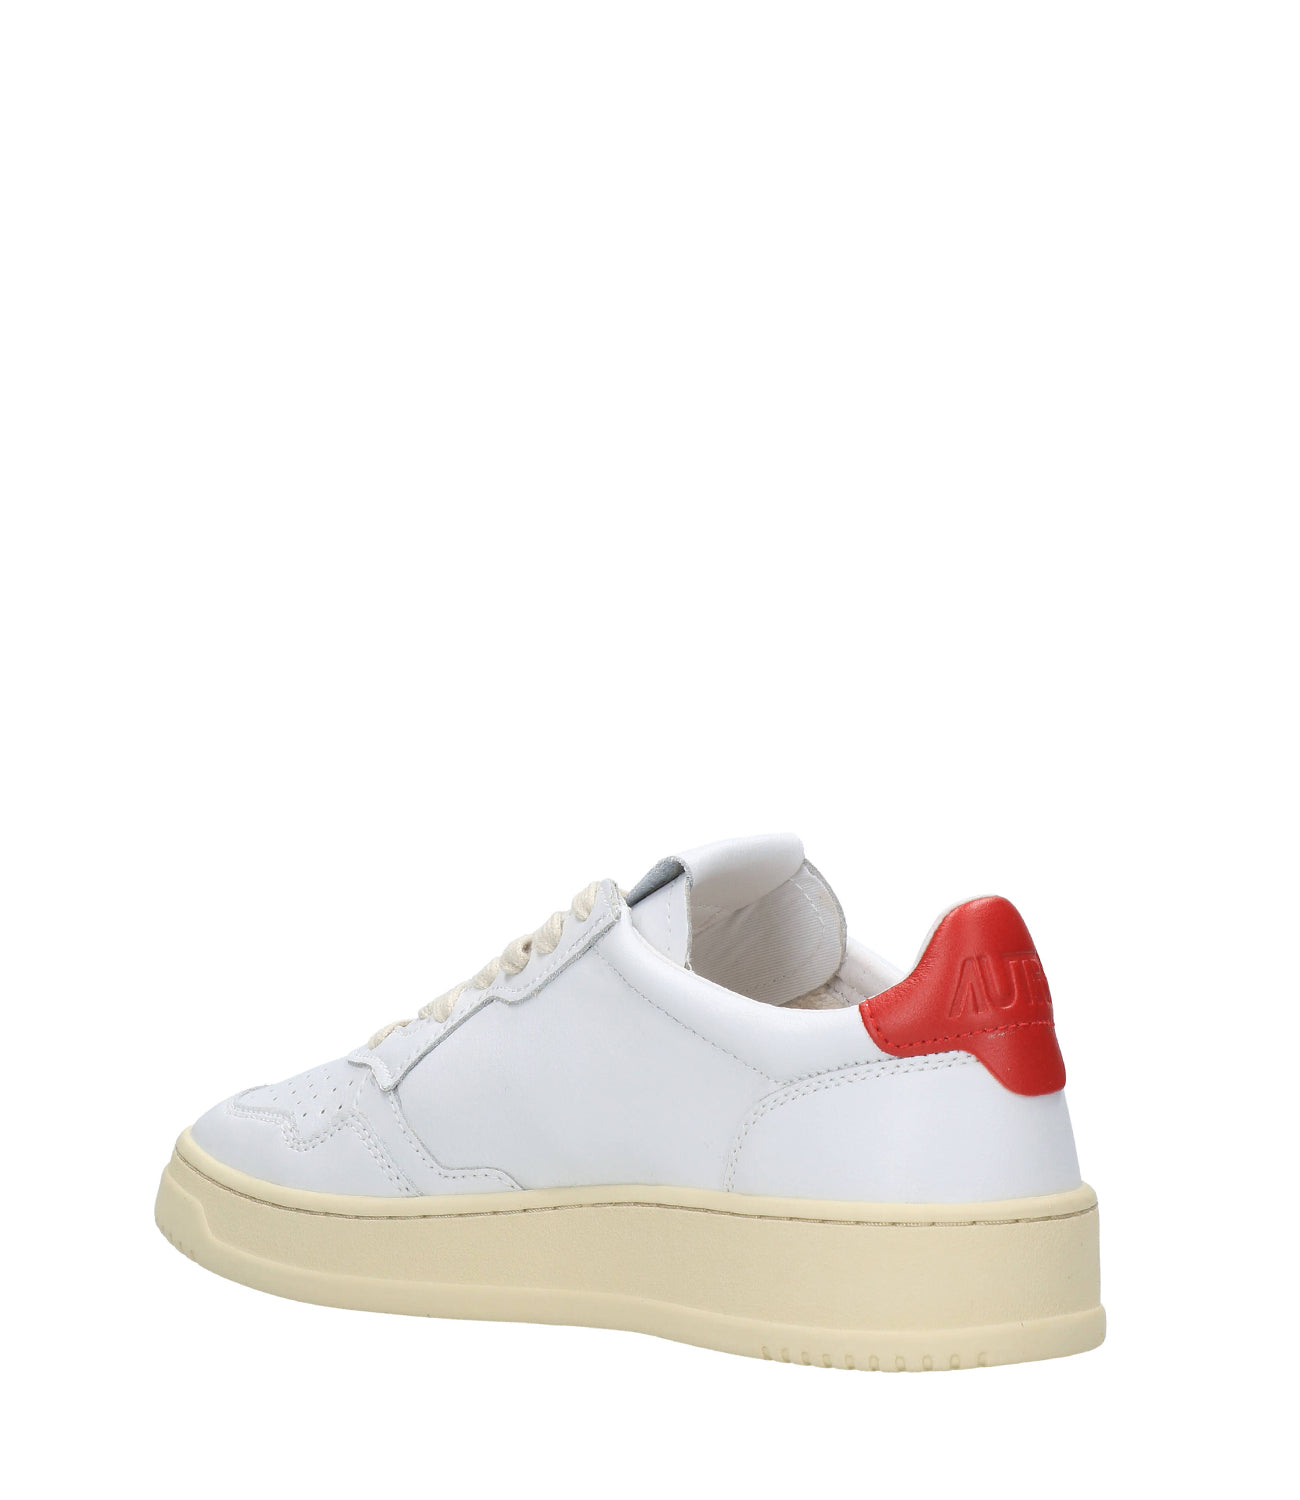 Autry | Sneakers Bianco e Rosso